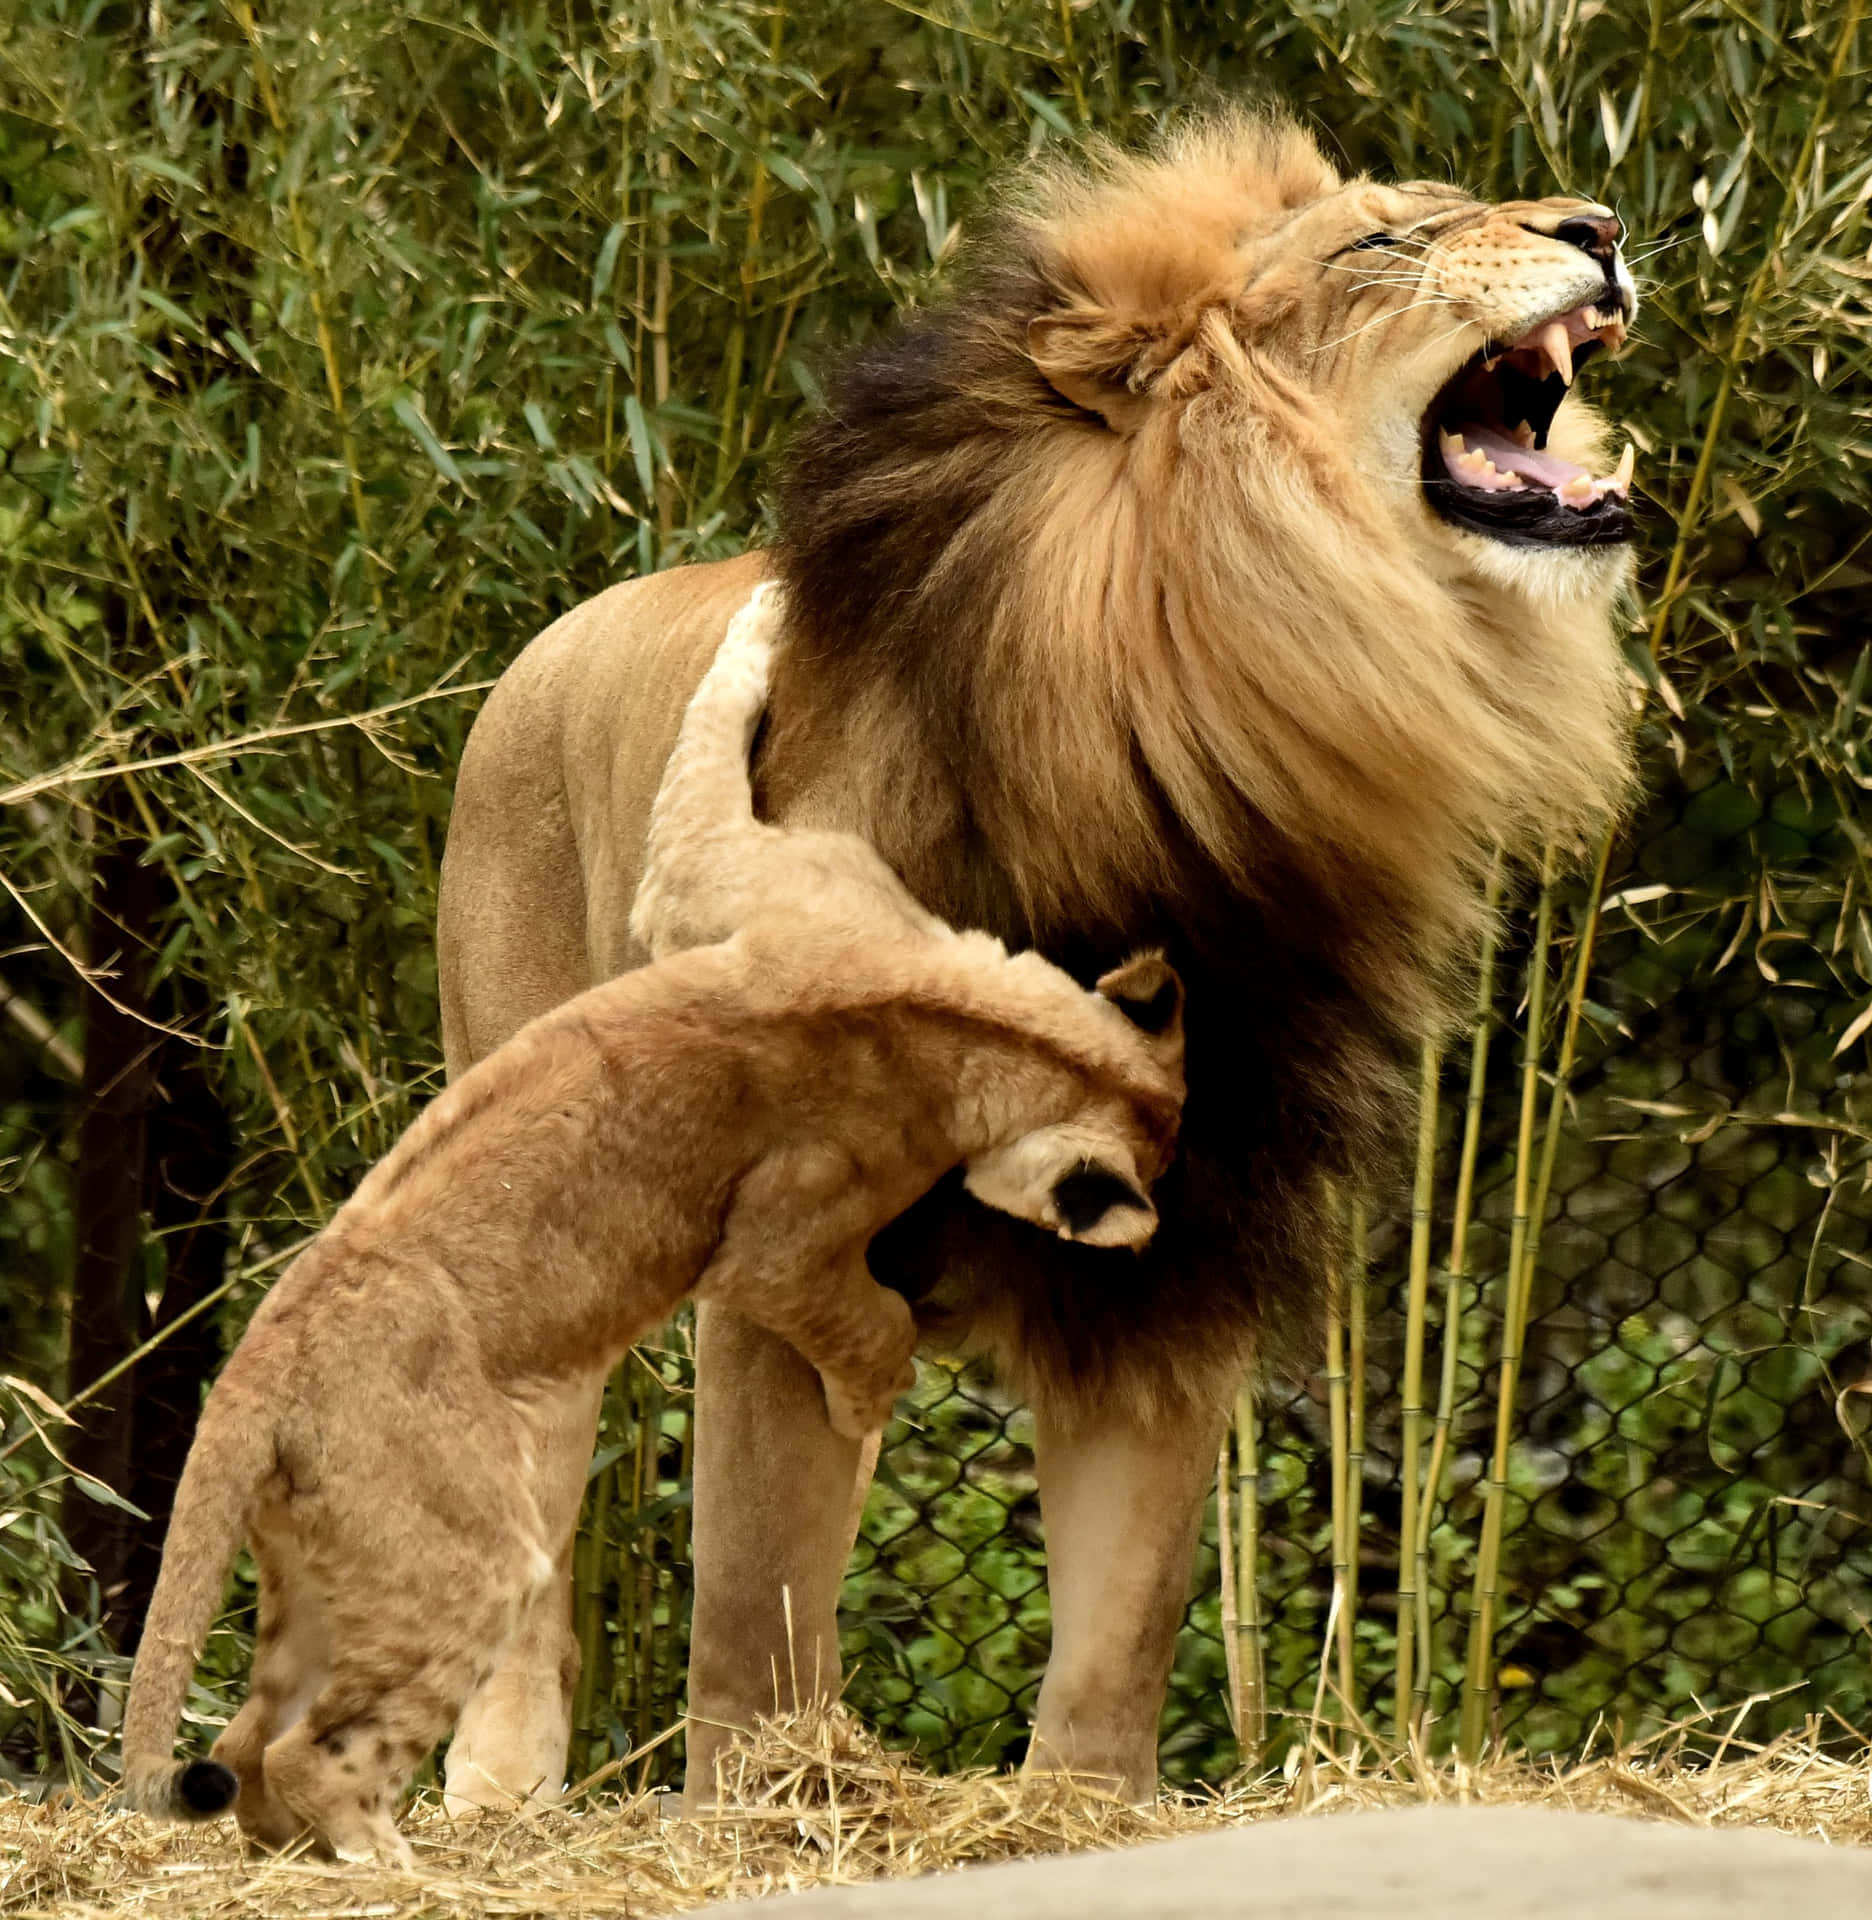 A close-up of a lion cub exploring its surroundings.